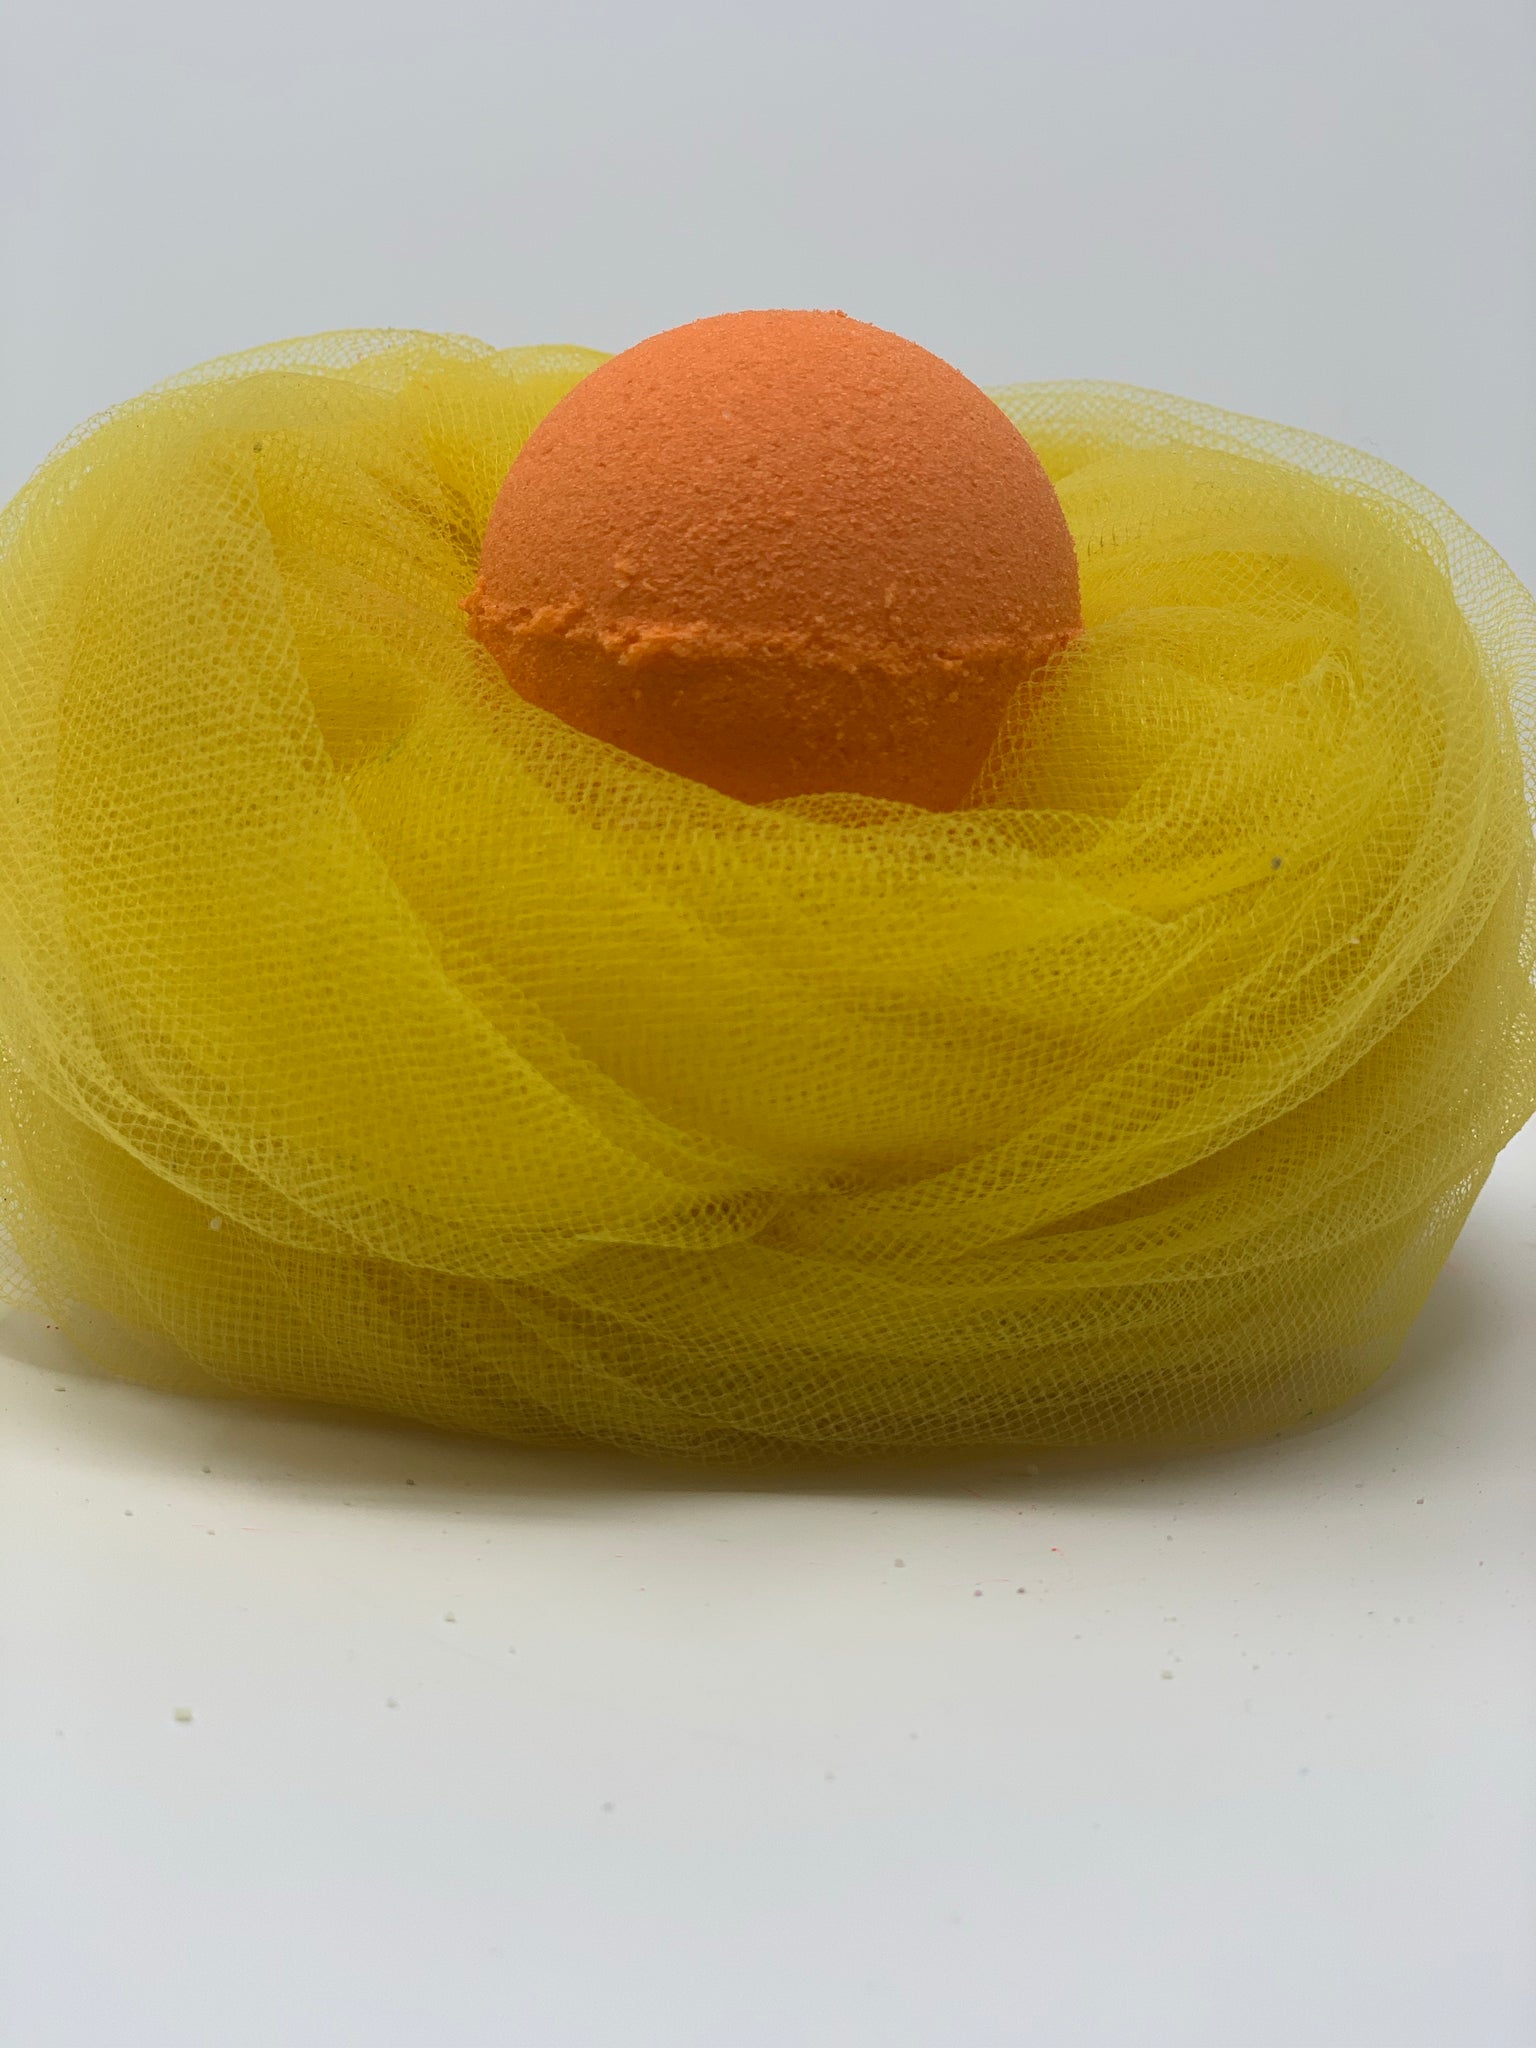 Orange Golf Ball 2.5 Bath Bomb